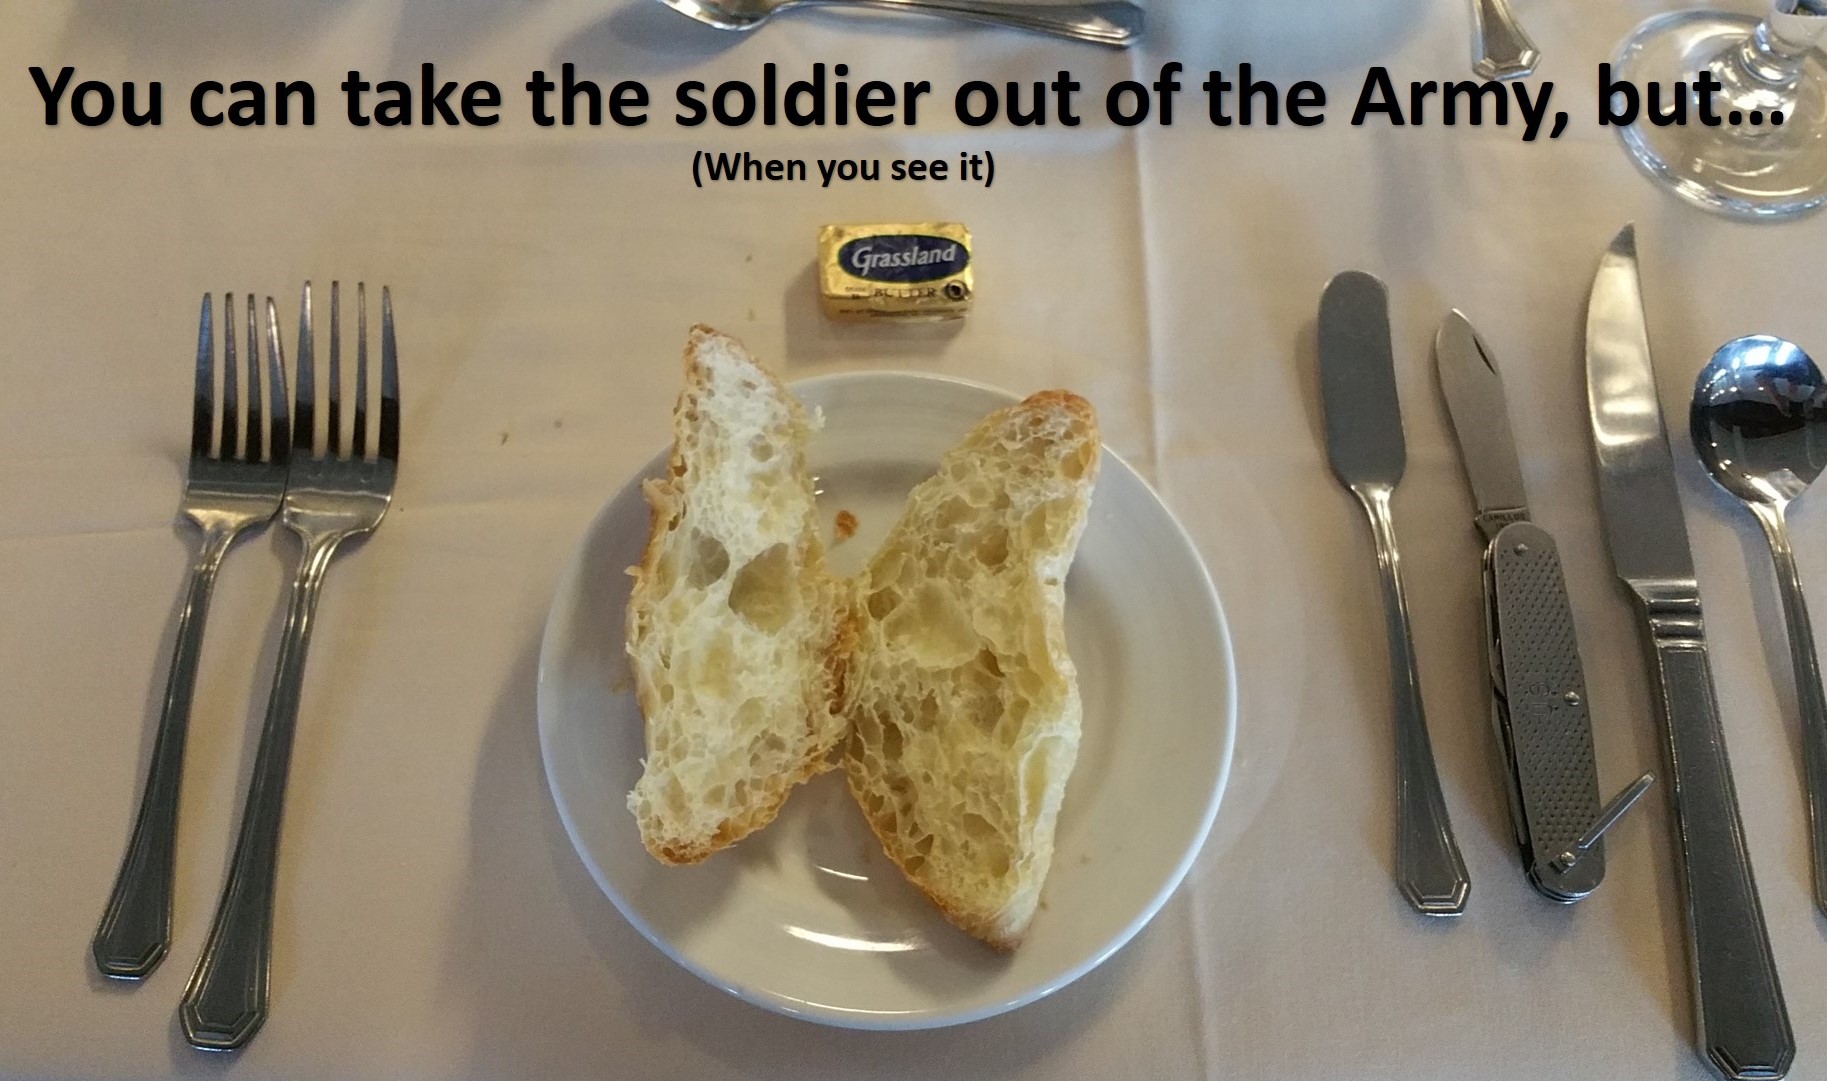 Army knife at dinner.jpg